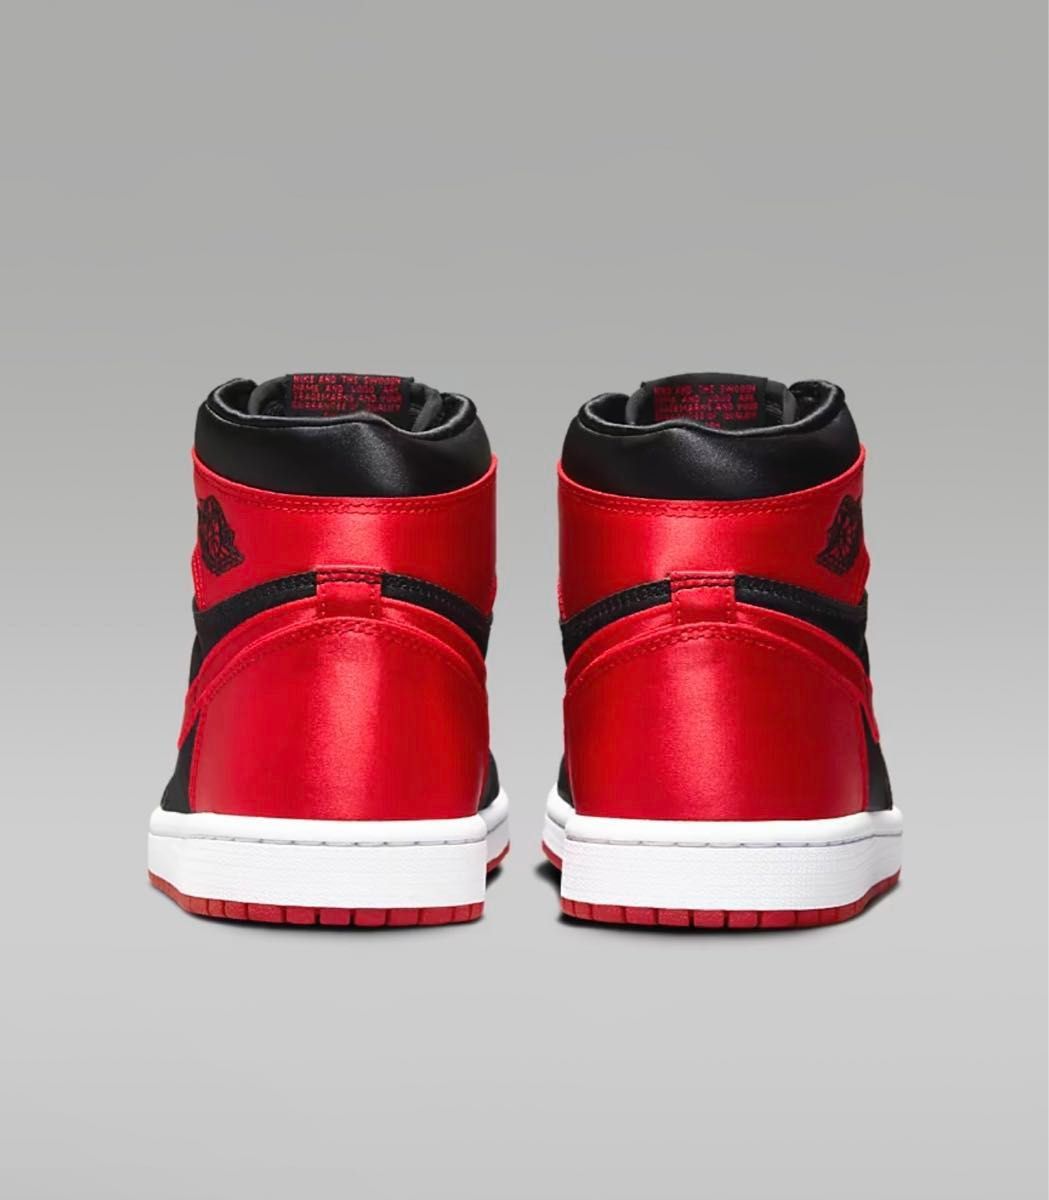 Nike Air Jordan 1 High OG W Satin Bred ナイキエアジョーダン1 